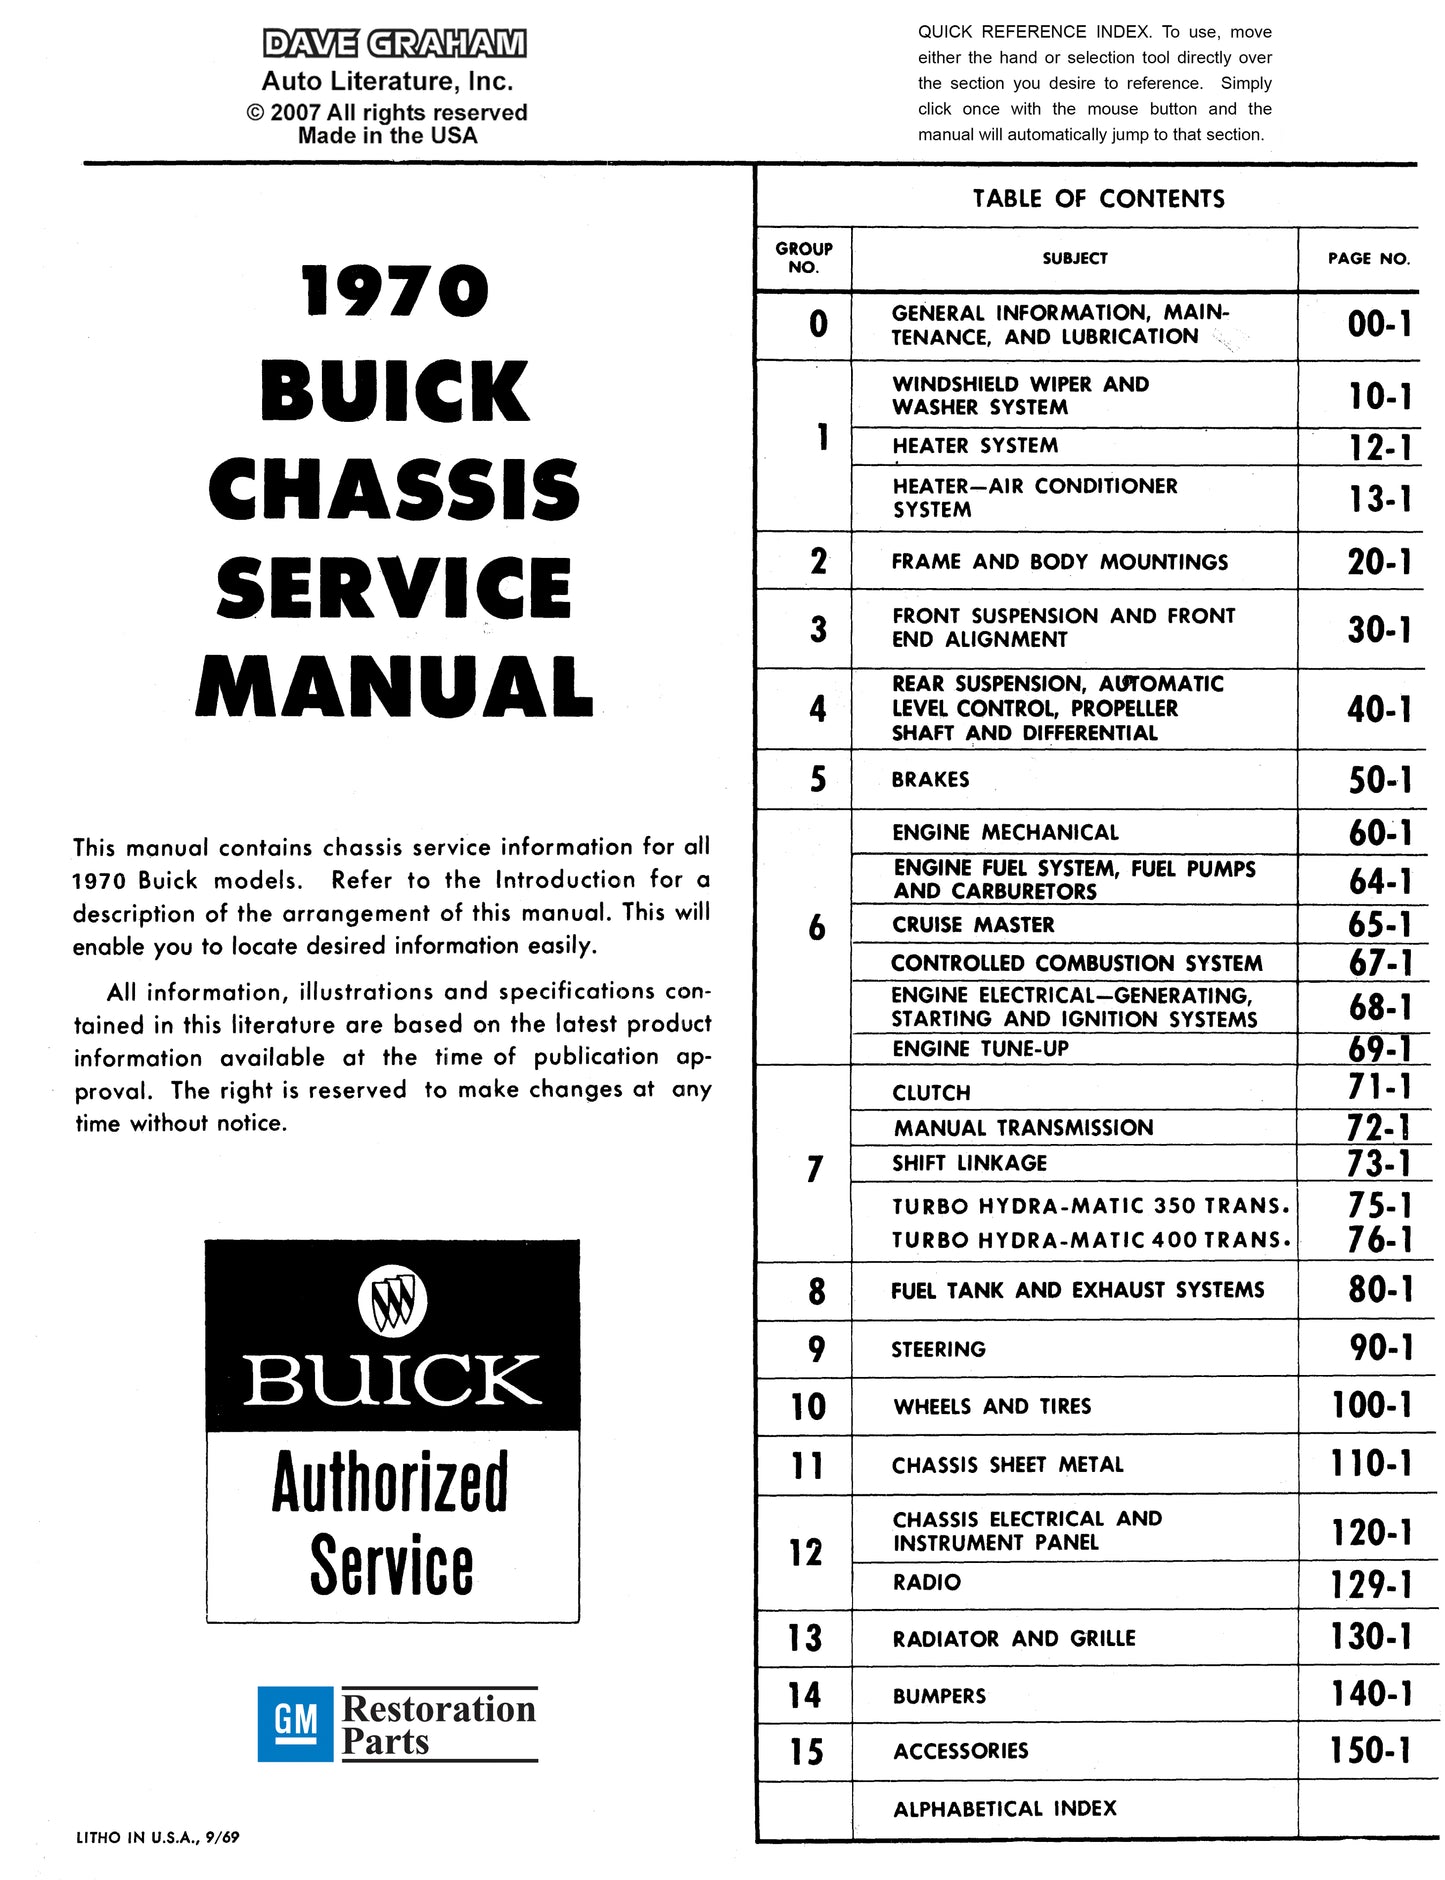 1970 Buick Repair Manual & Body Manual - All Models